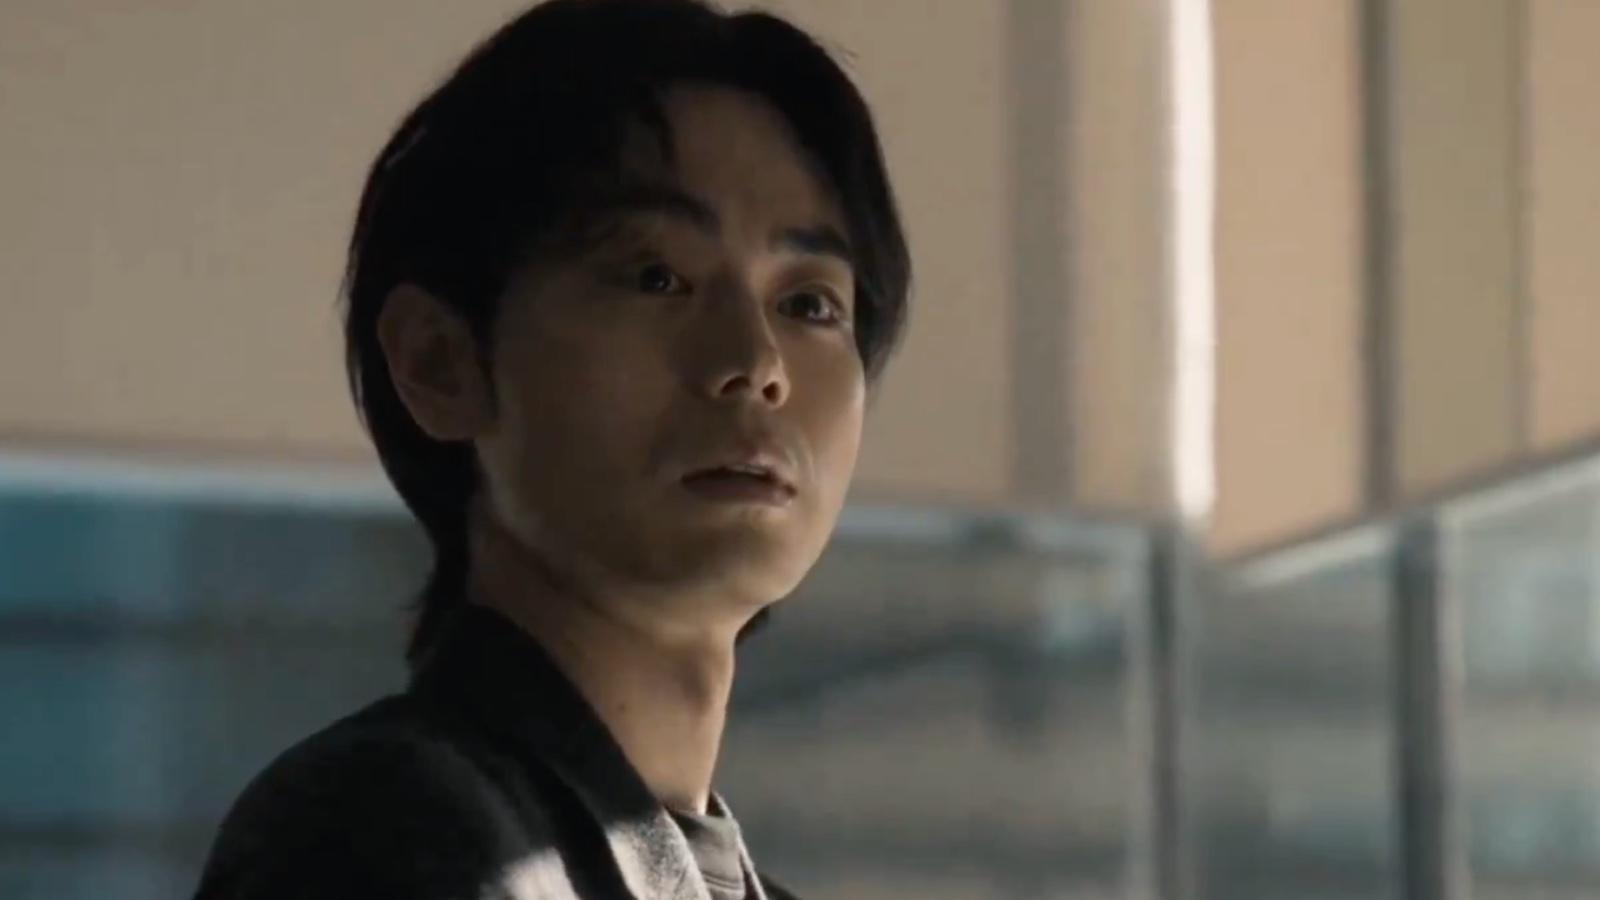 Suda Masaki in Parasyte The Grey as Shinichi